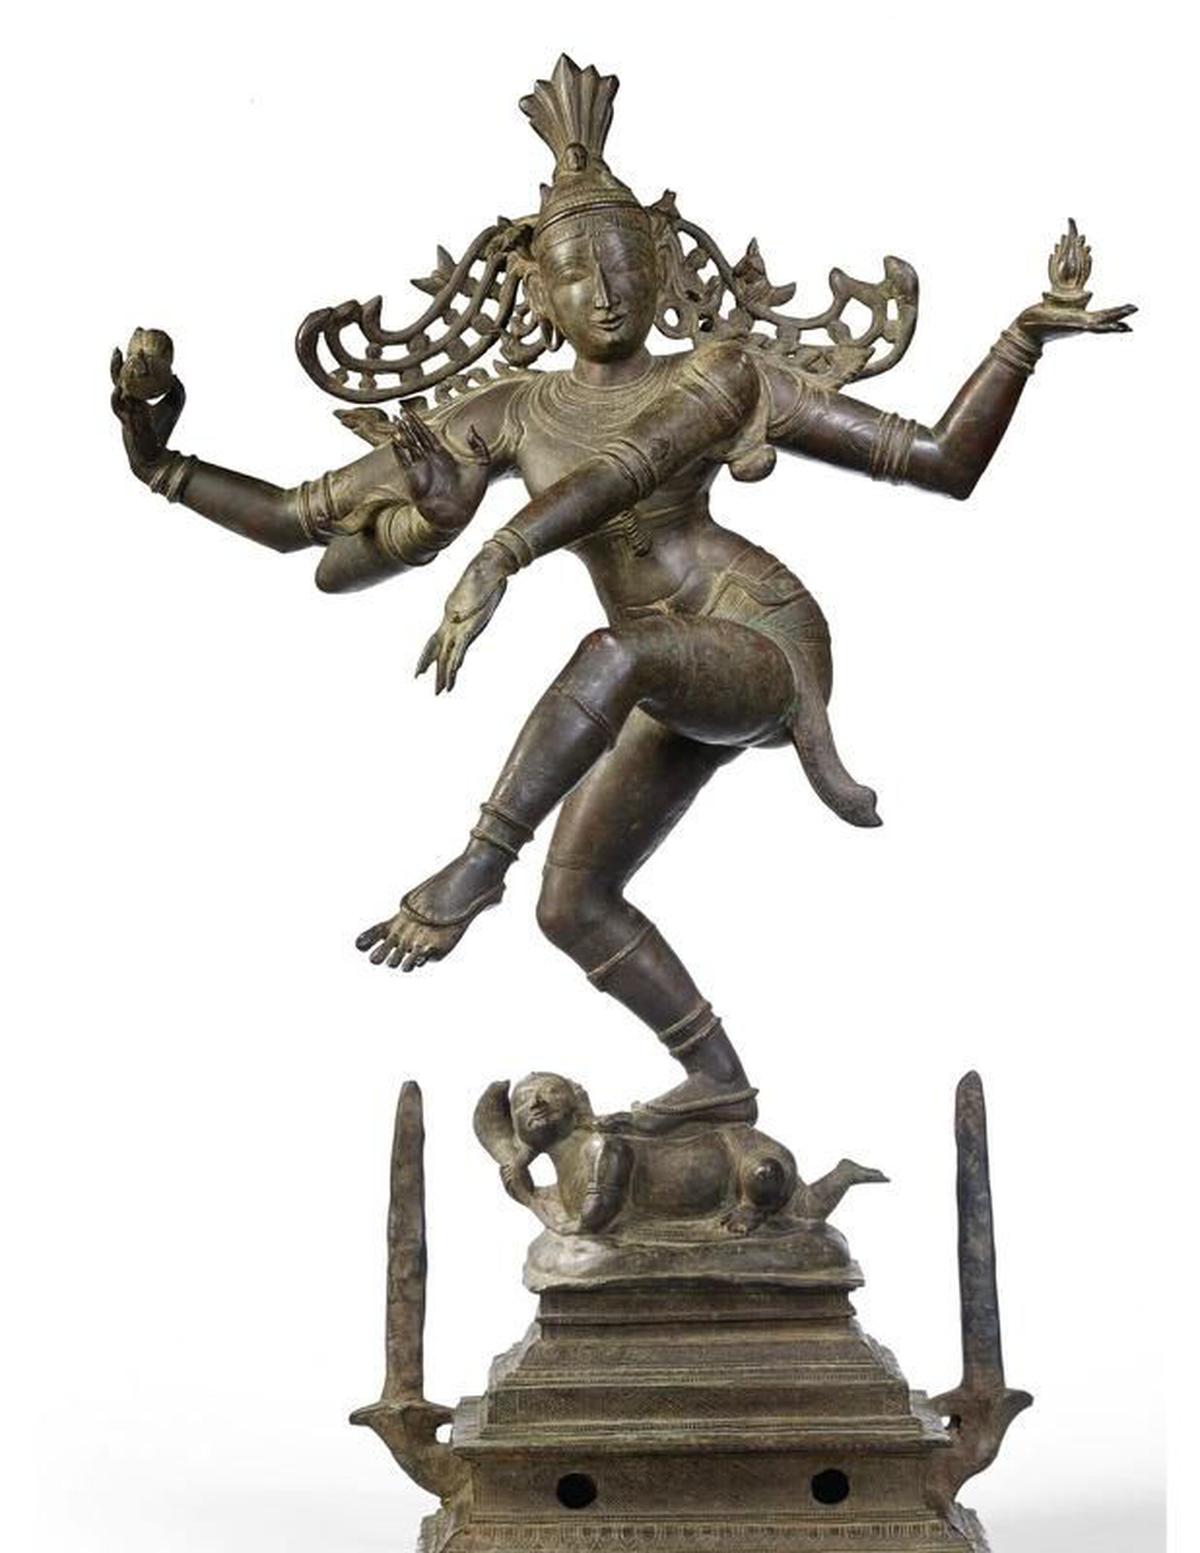 Tamil Nadu stops auction of stolen Nataraja idol in France - The Hindu